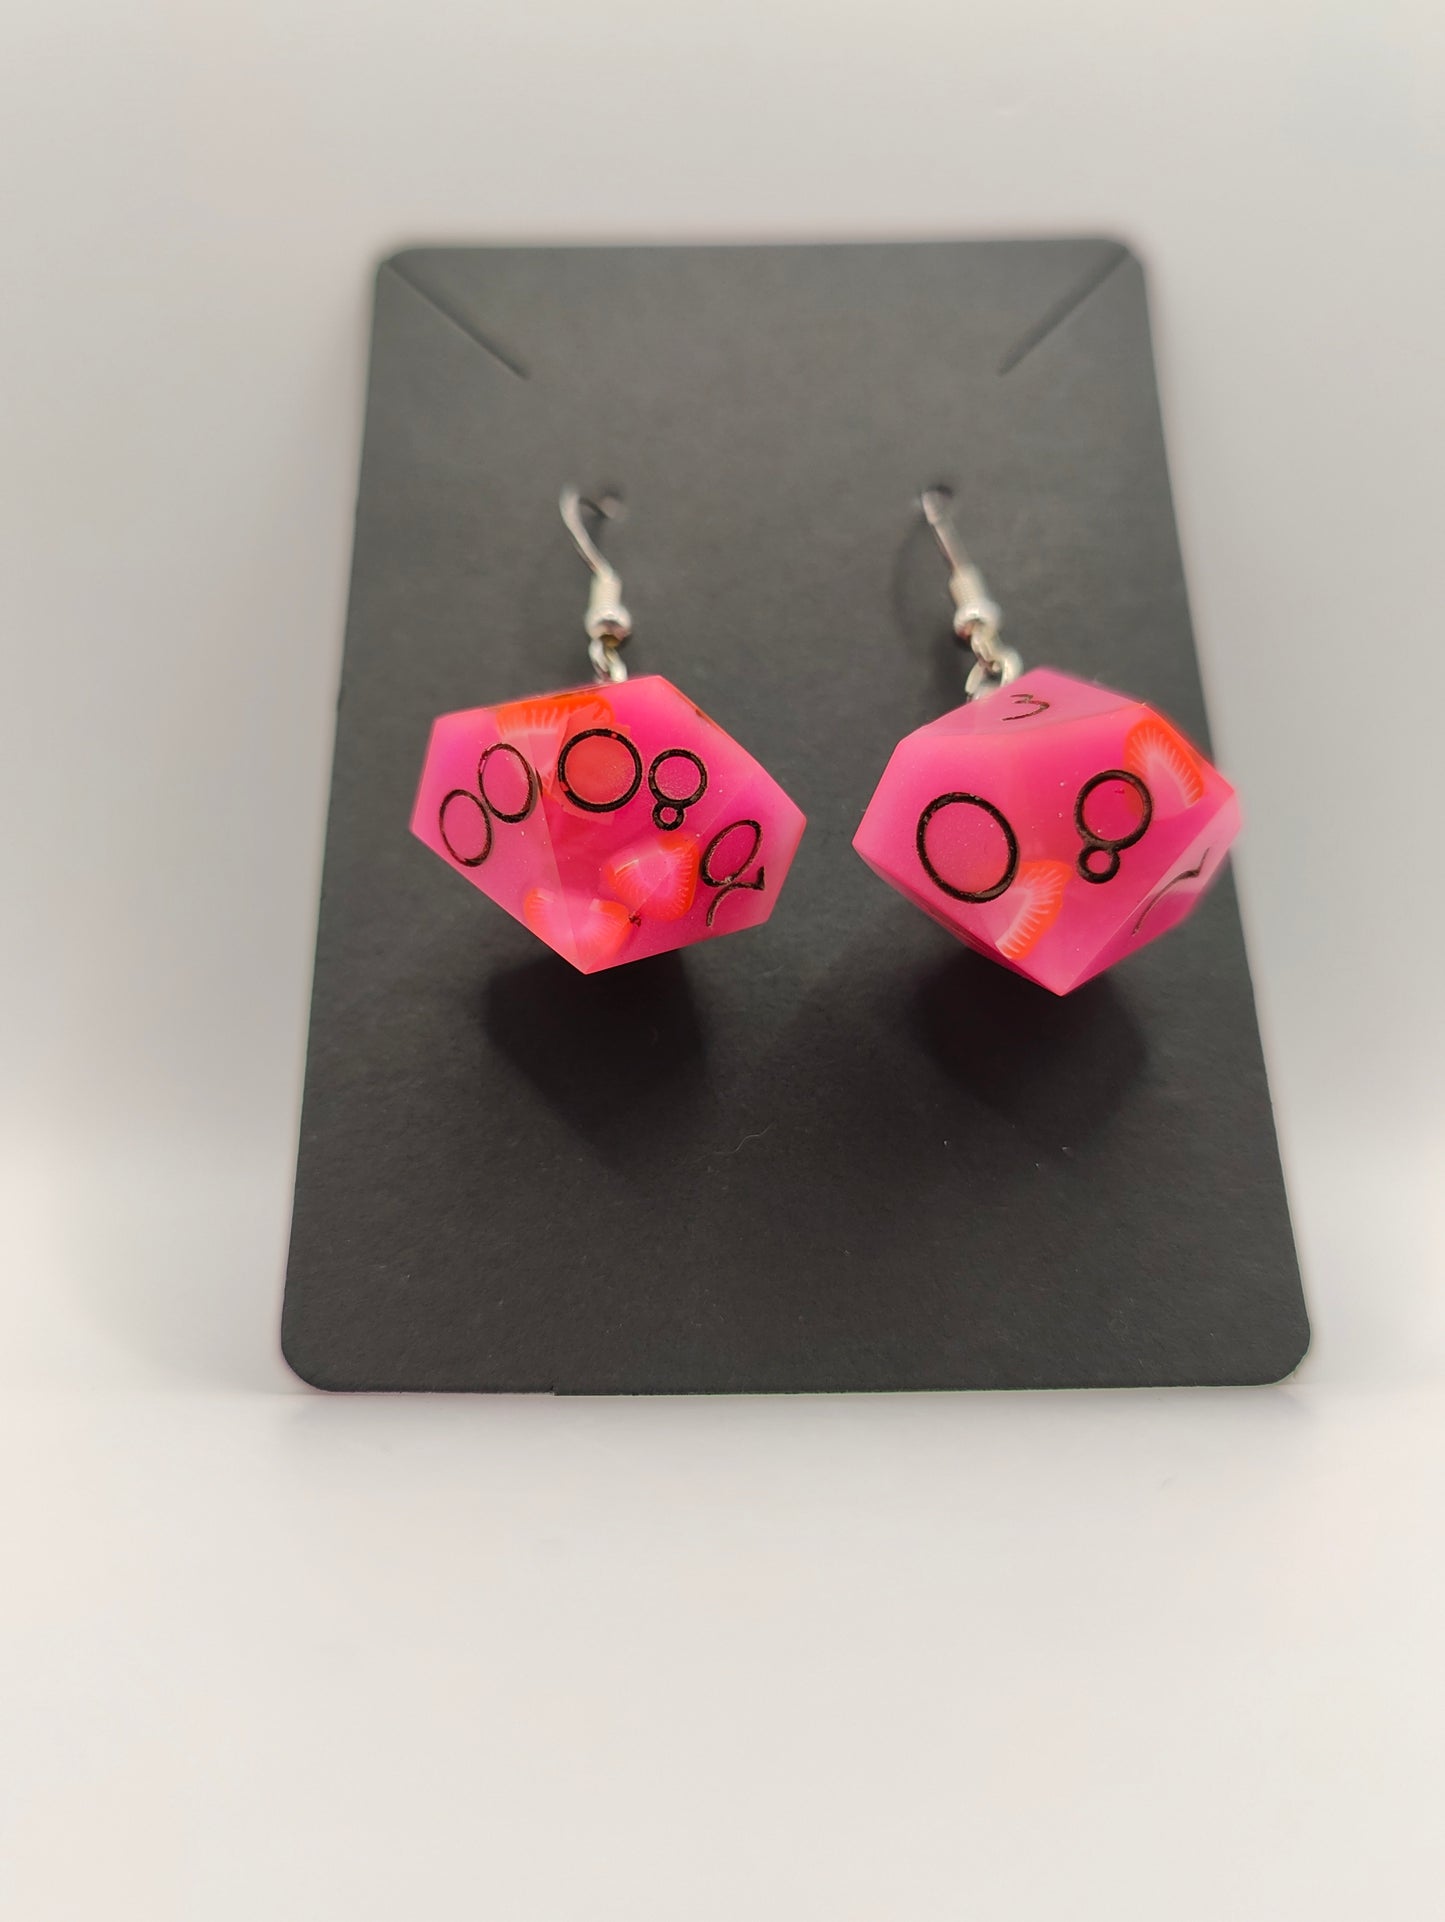 Handmade D100/D10 earrings: Strawberry chocolate